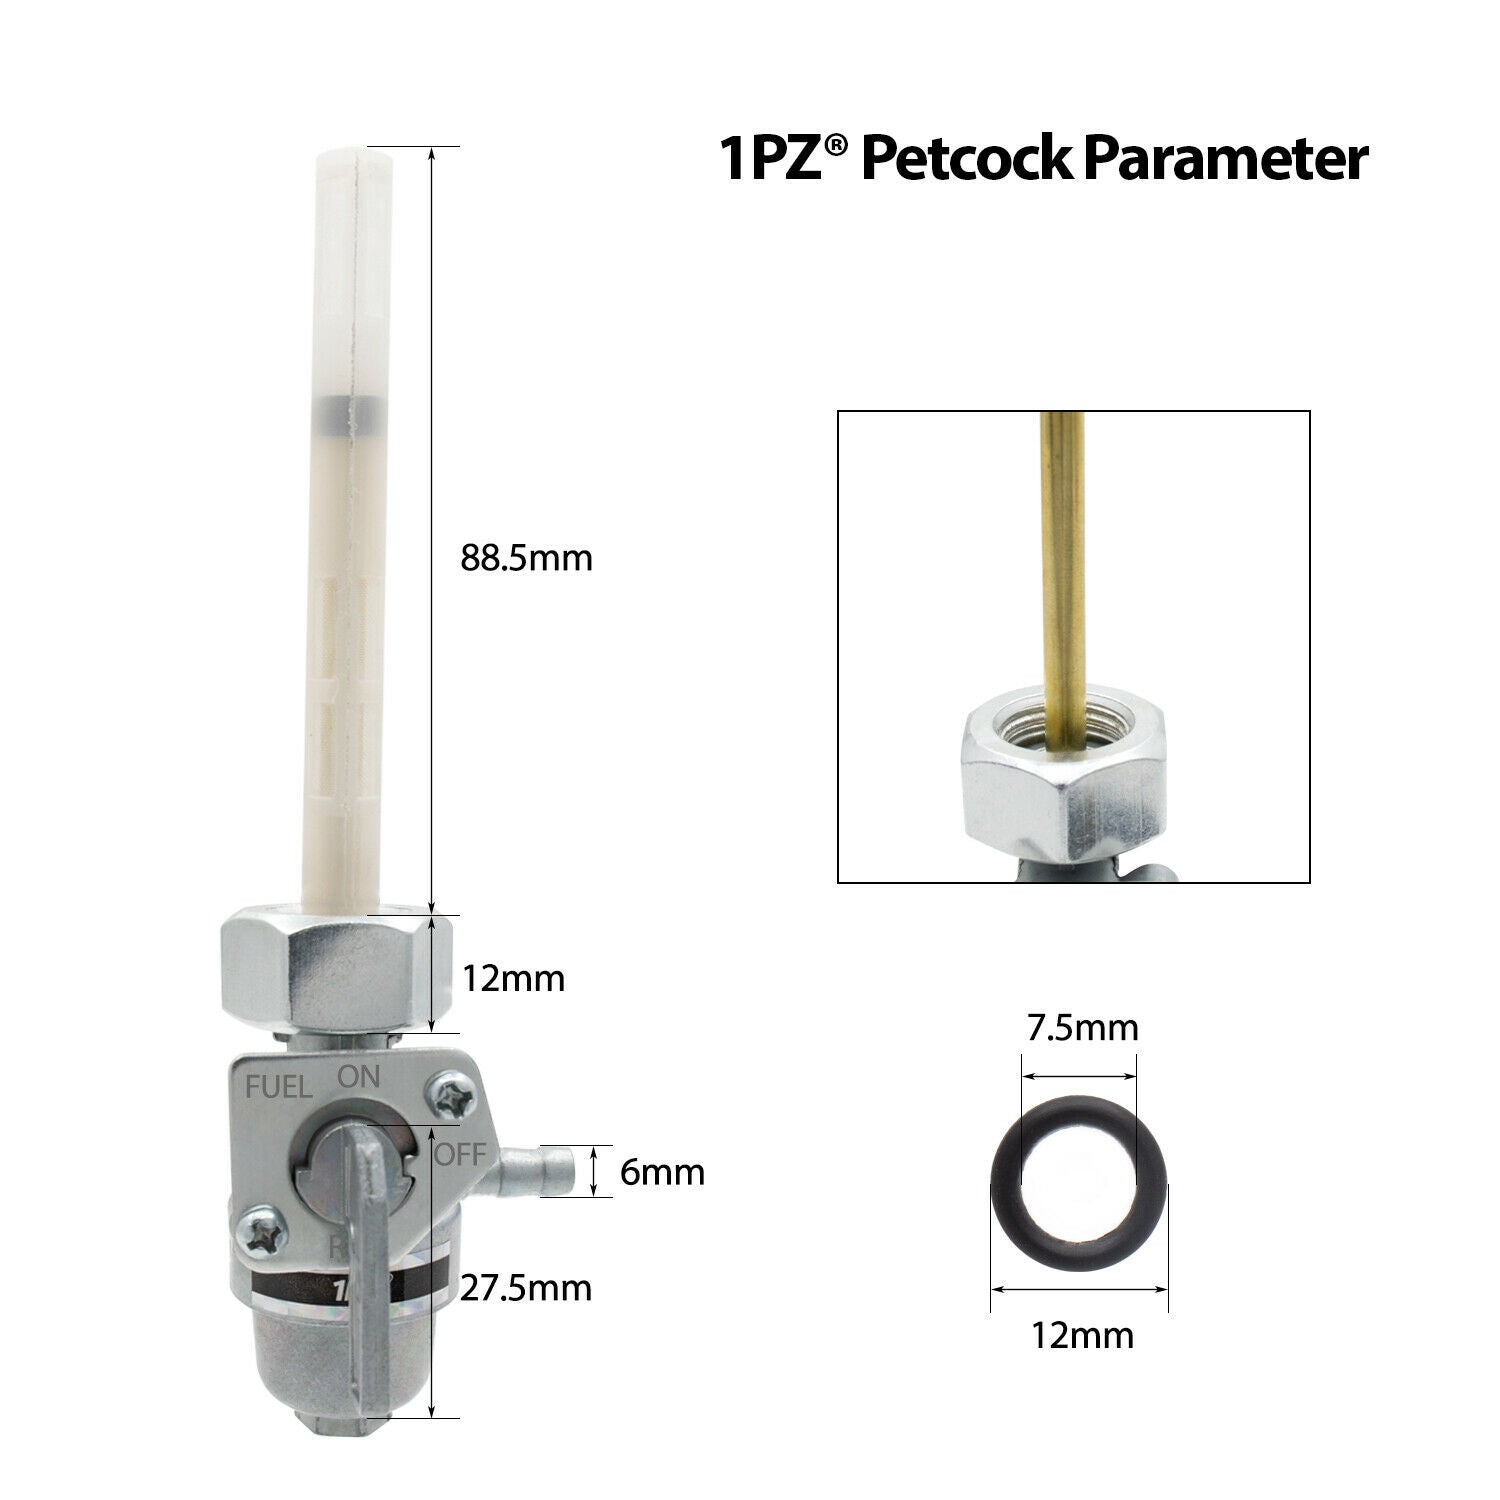 1PZ Premium Fuel Petcock Assembly Replacement for Honda ATC 185 185S 200X 200S 200M 16950-149-025